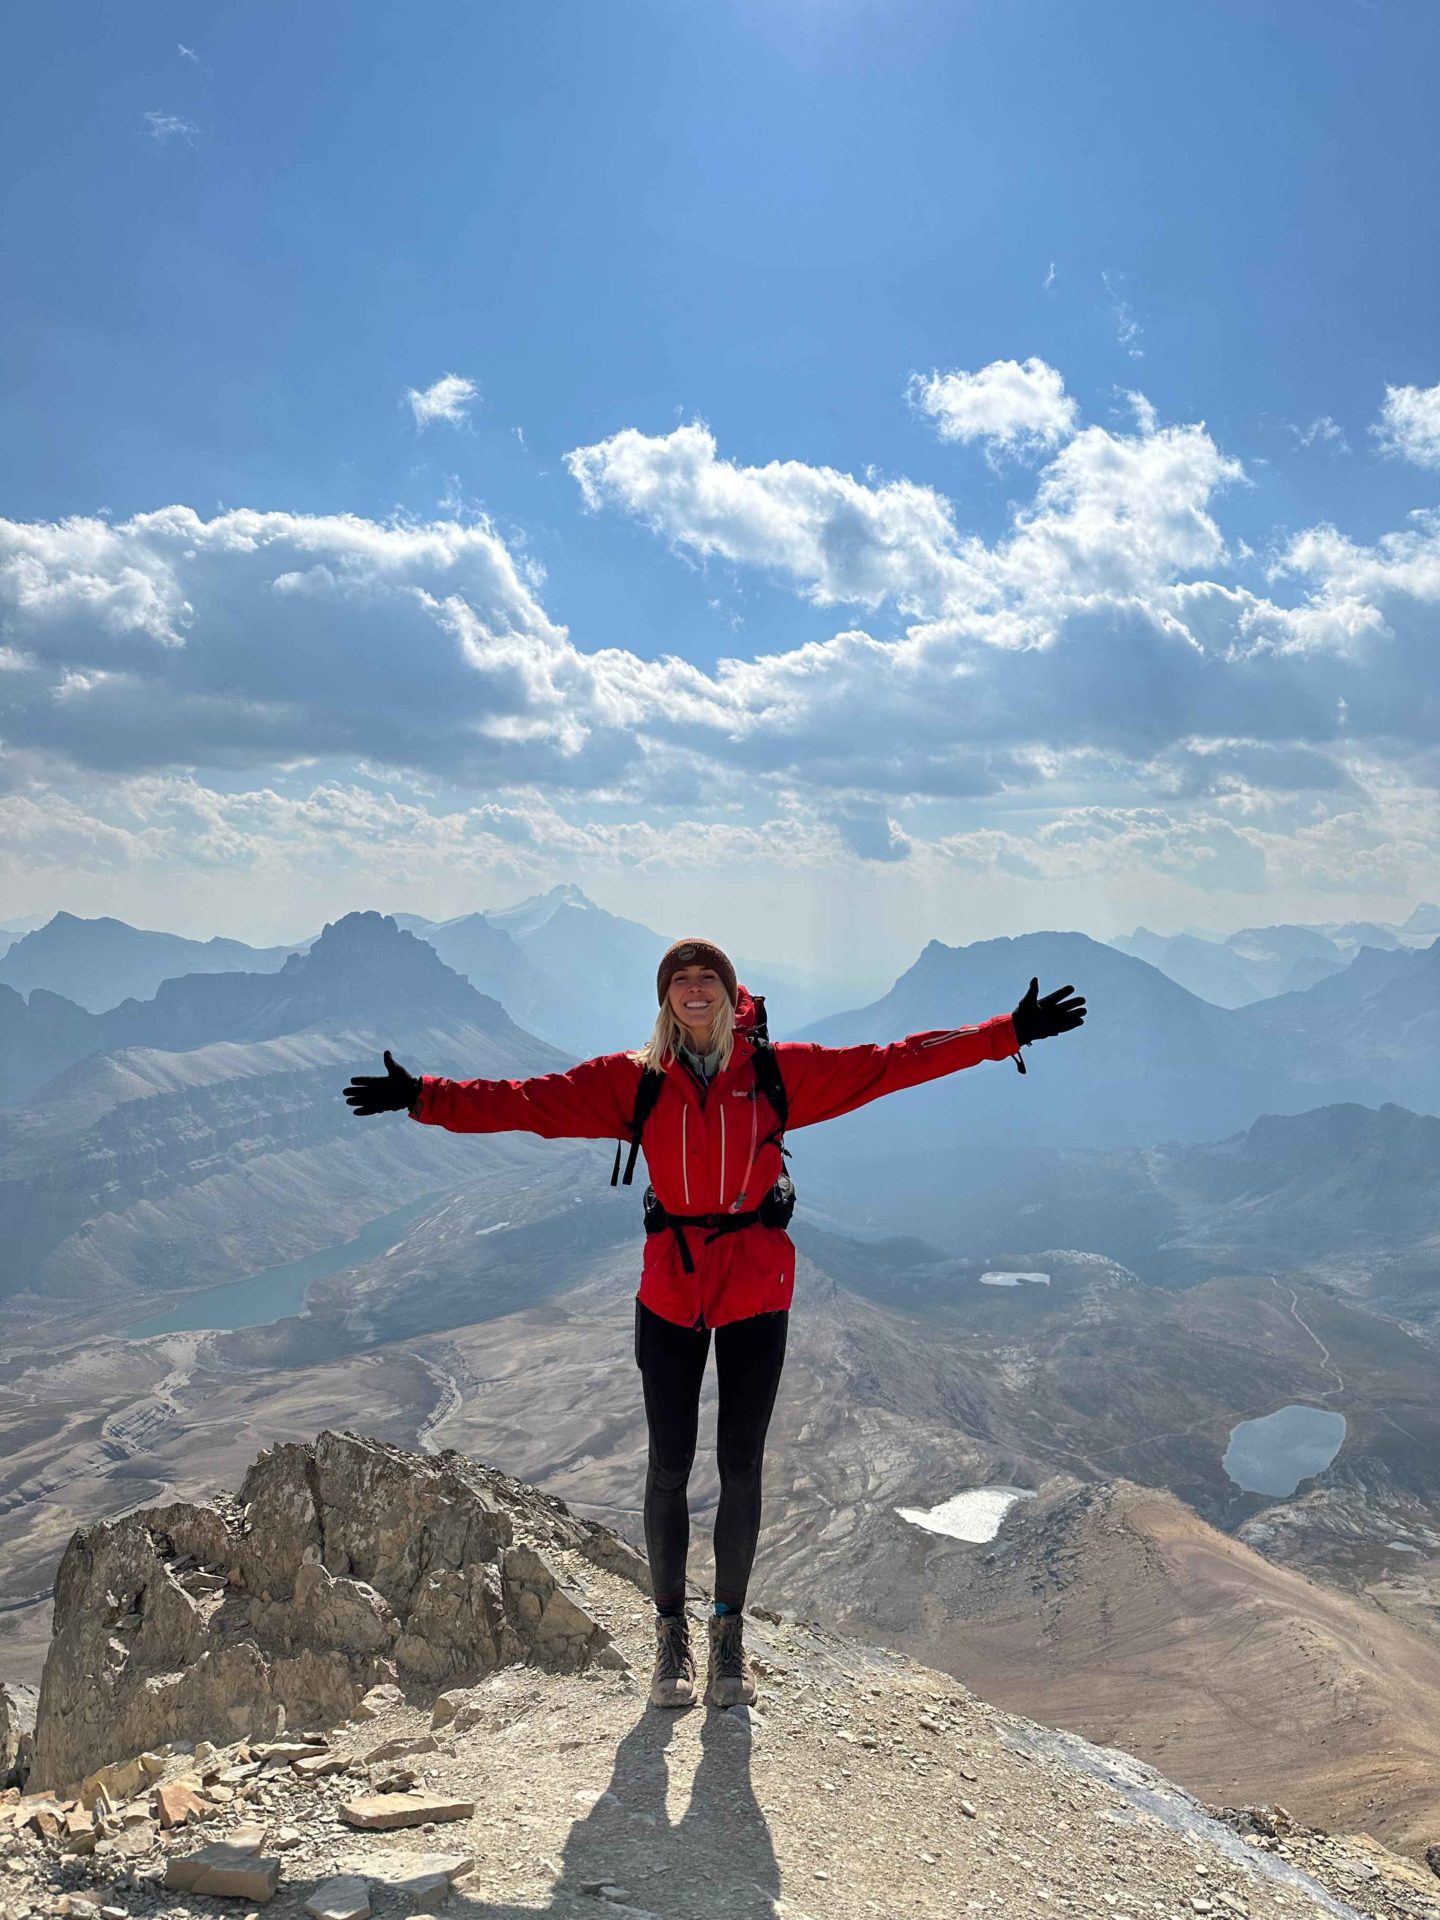 Zanna van Dijk stands at the top of Cirque Peak in the Rockies, Canada - Canada Road Trip Itinerary